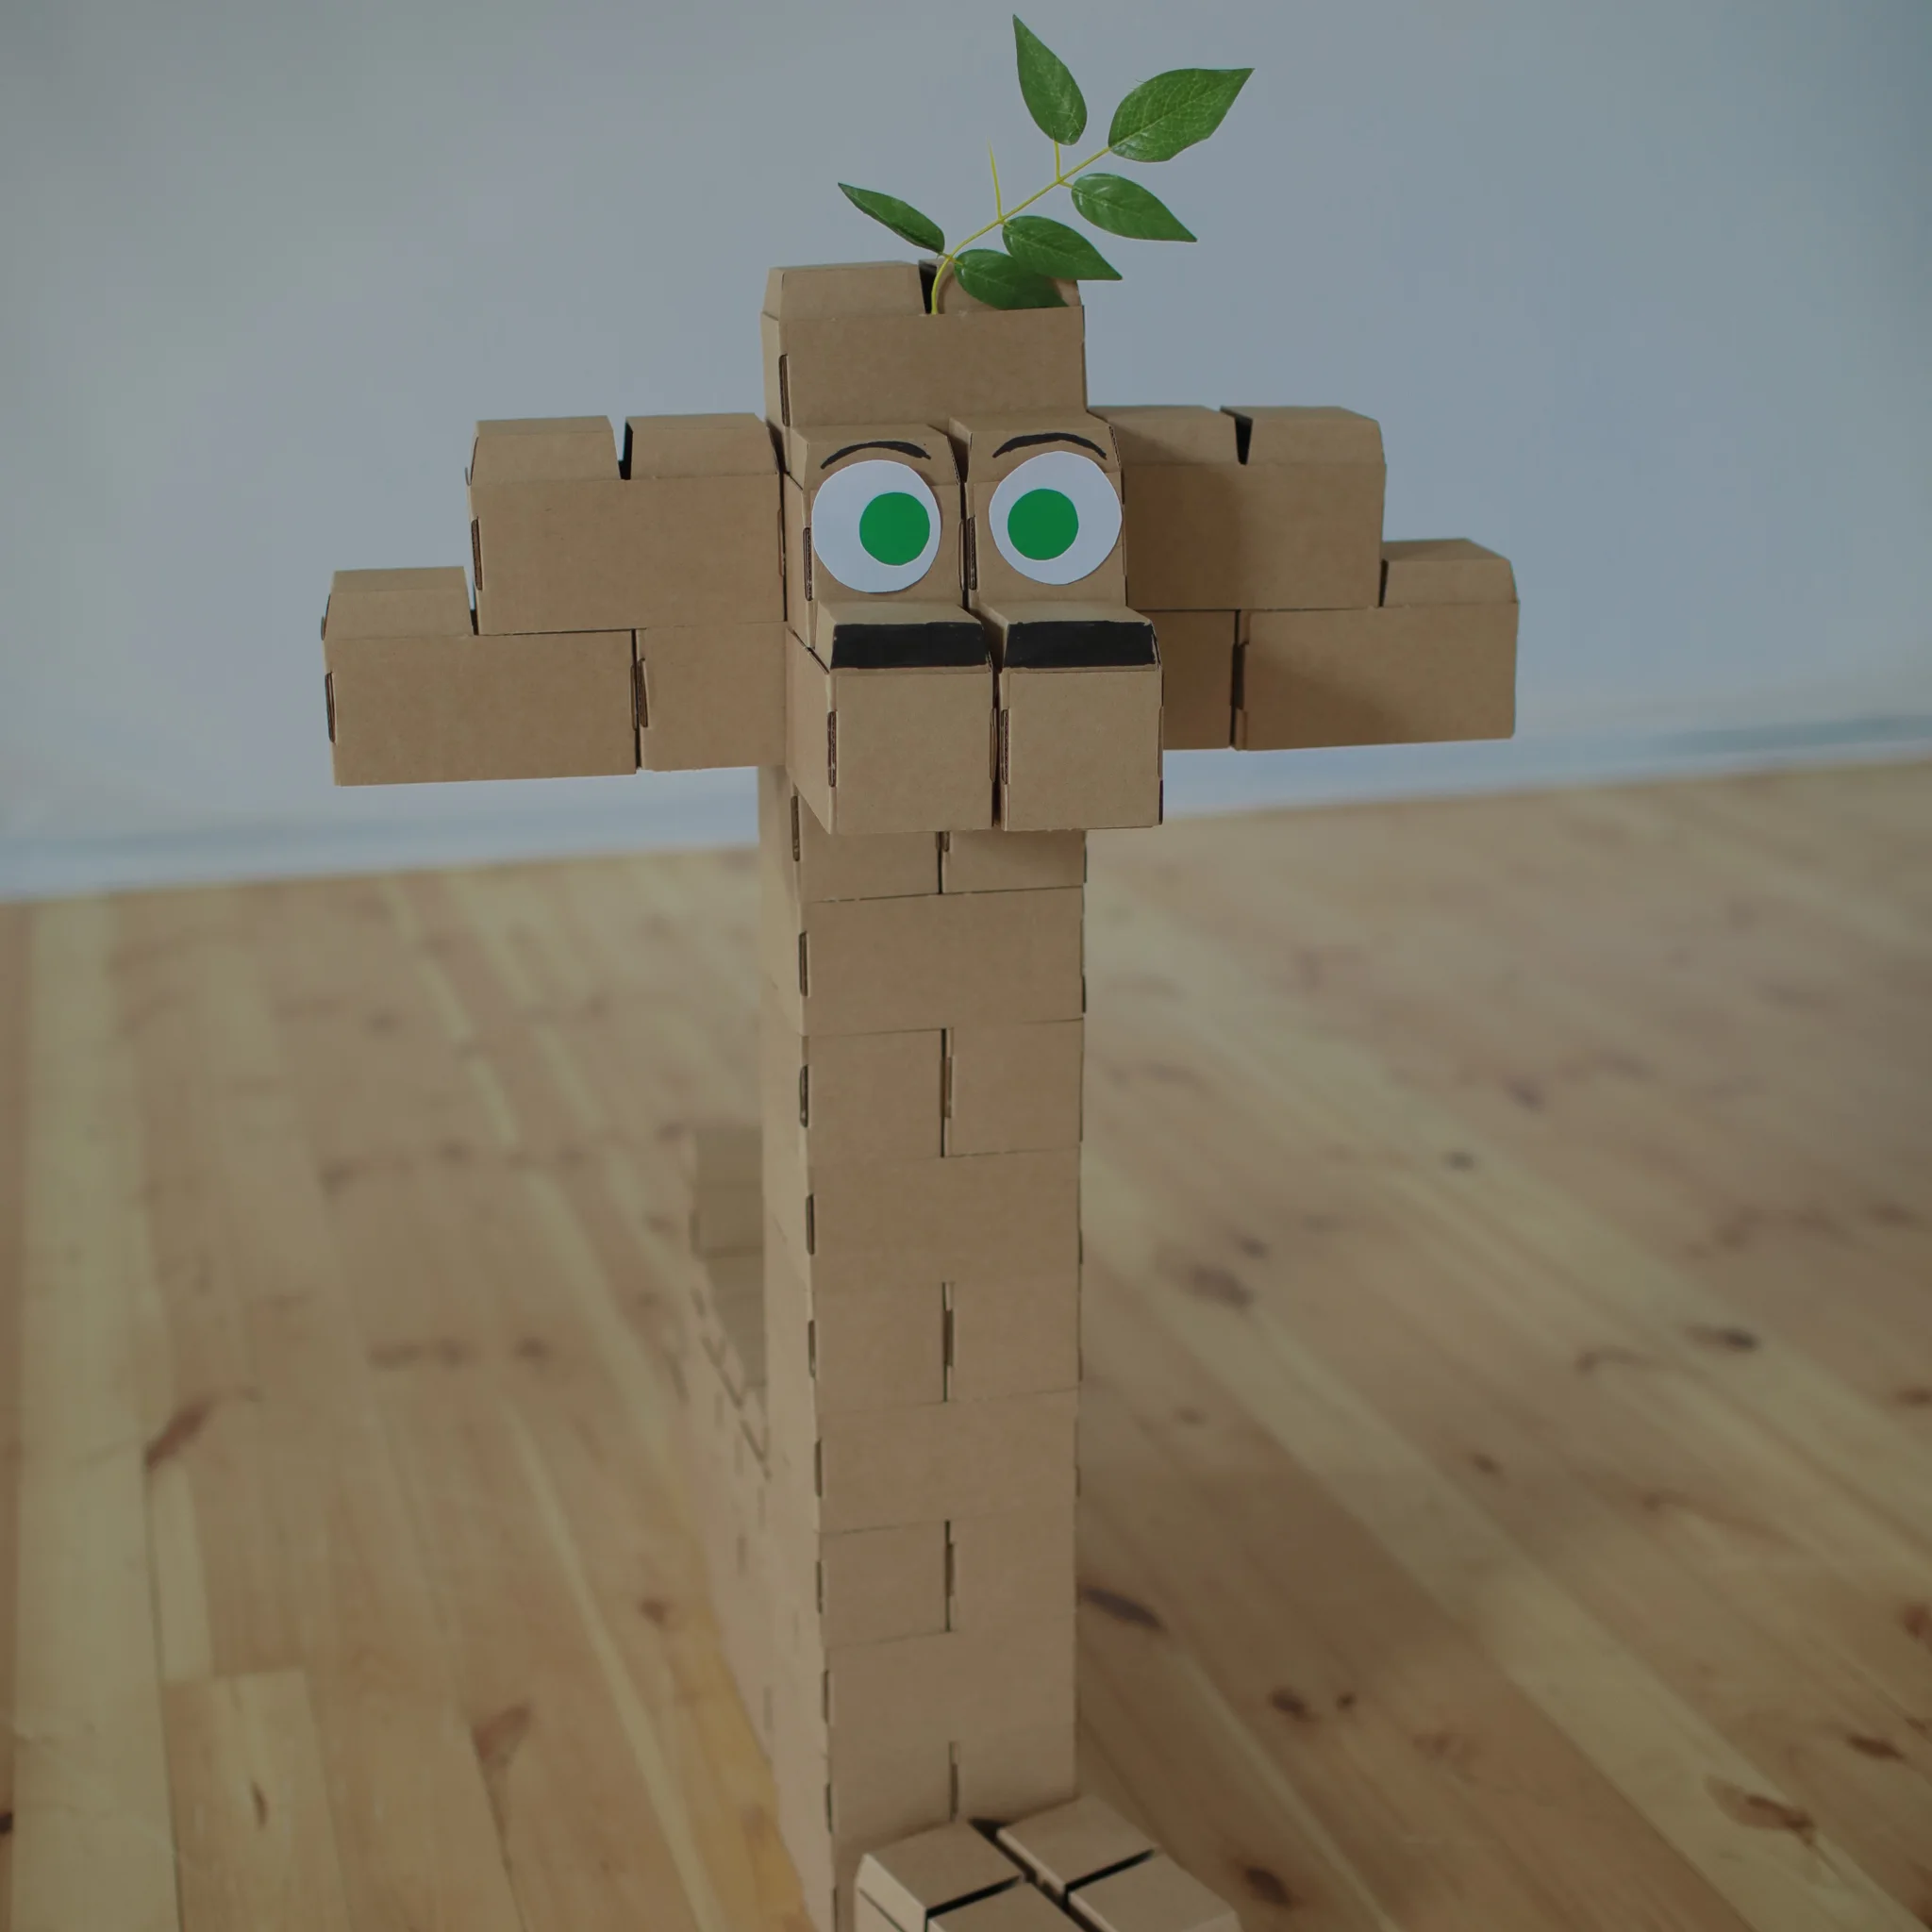 Cardboard Constructor Small Blocks 60 parts eco toy